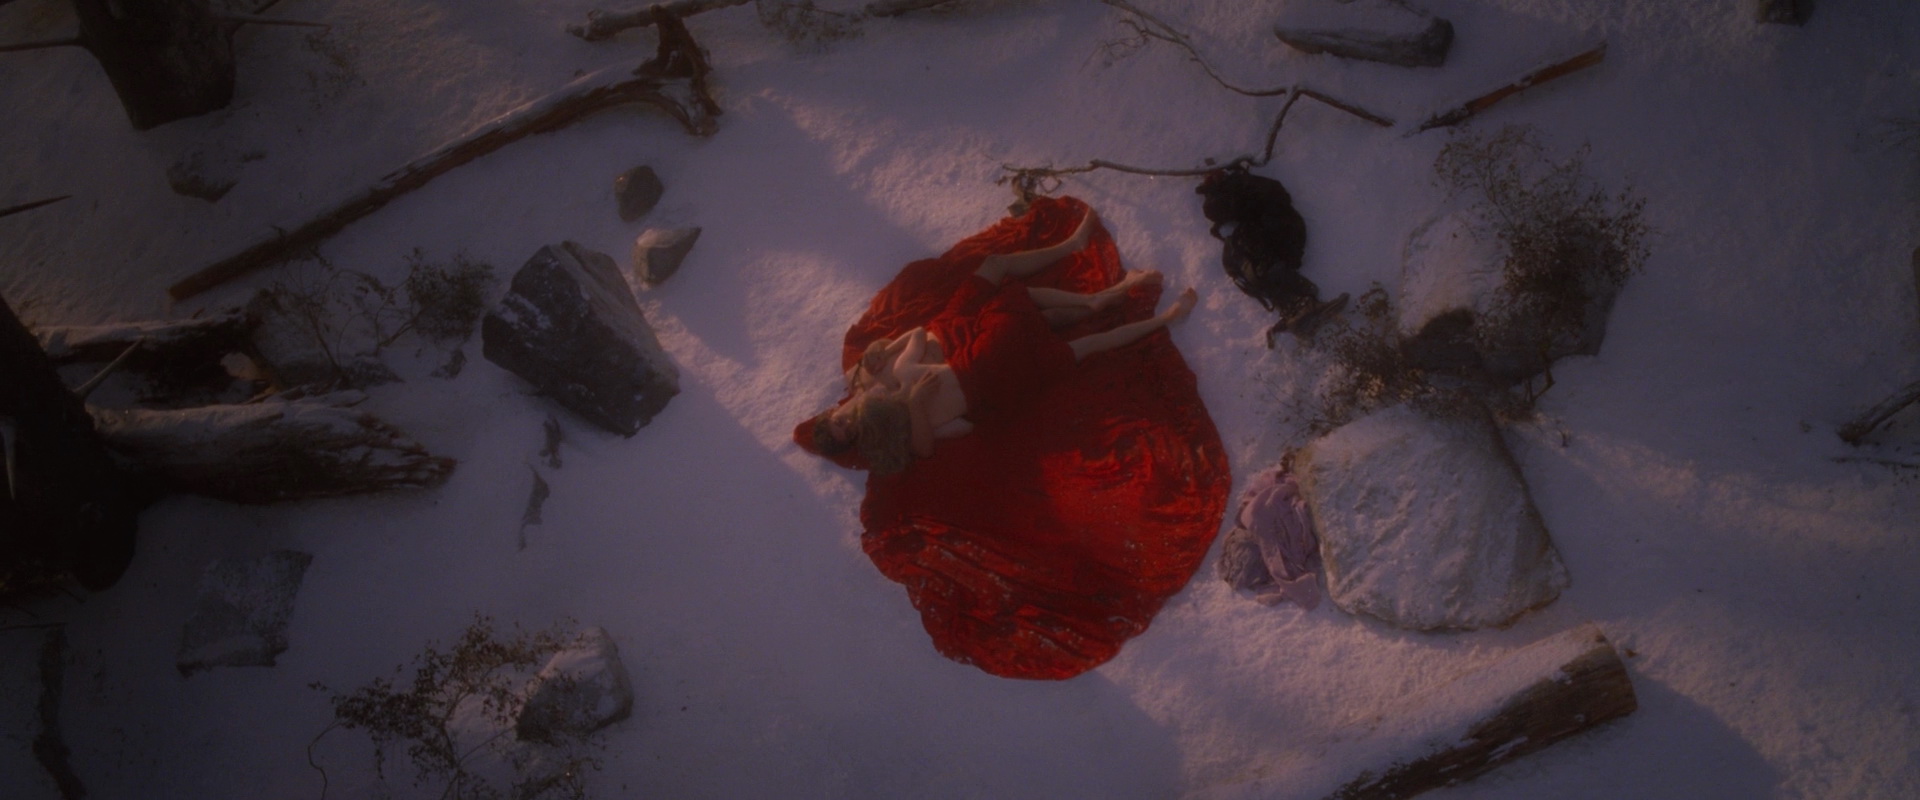 Amanda Seyfried Nue Dans Red Riding Hood 2011